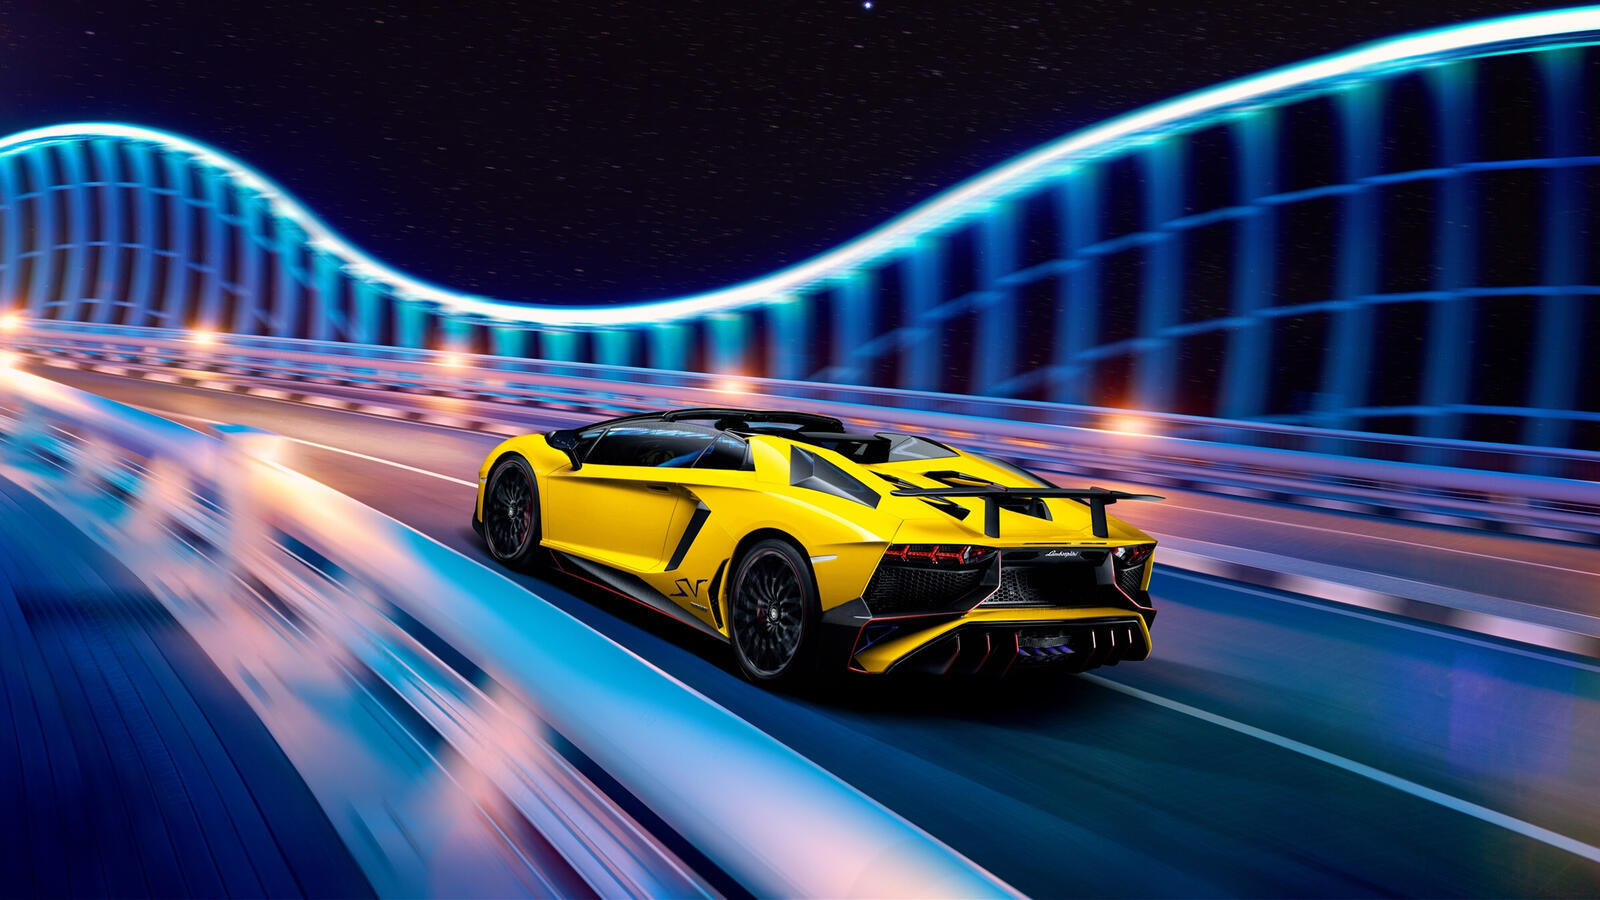 Wallpapers Lamborghini Aventador cars racing on the desktop